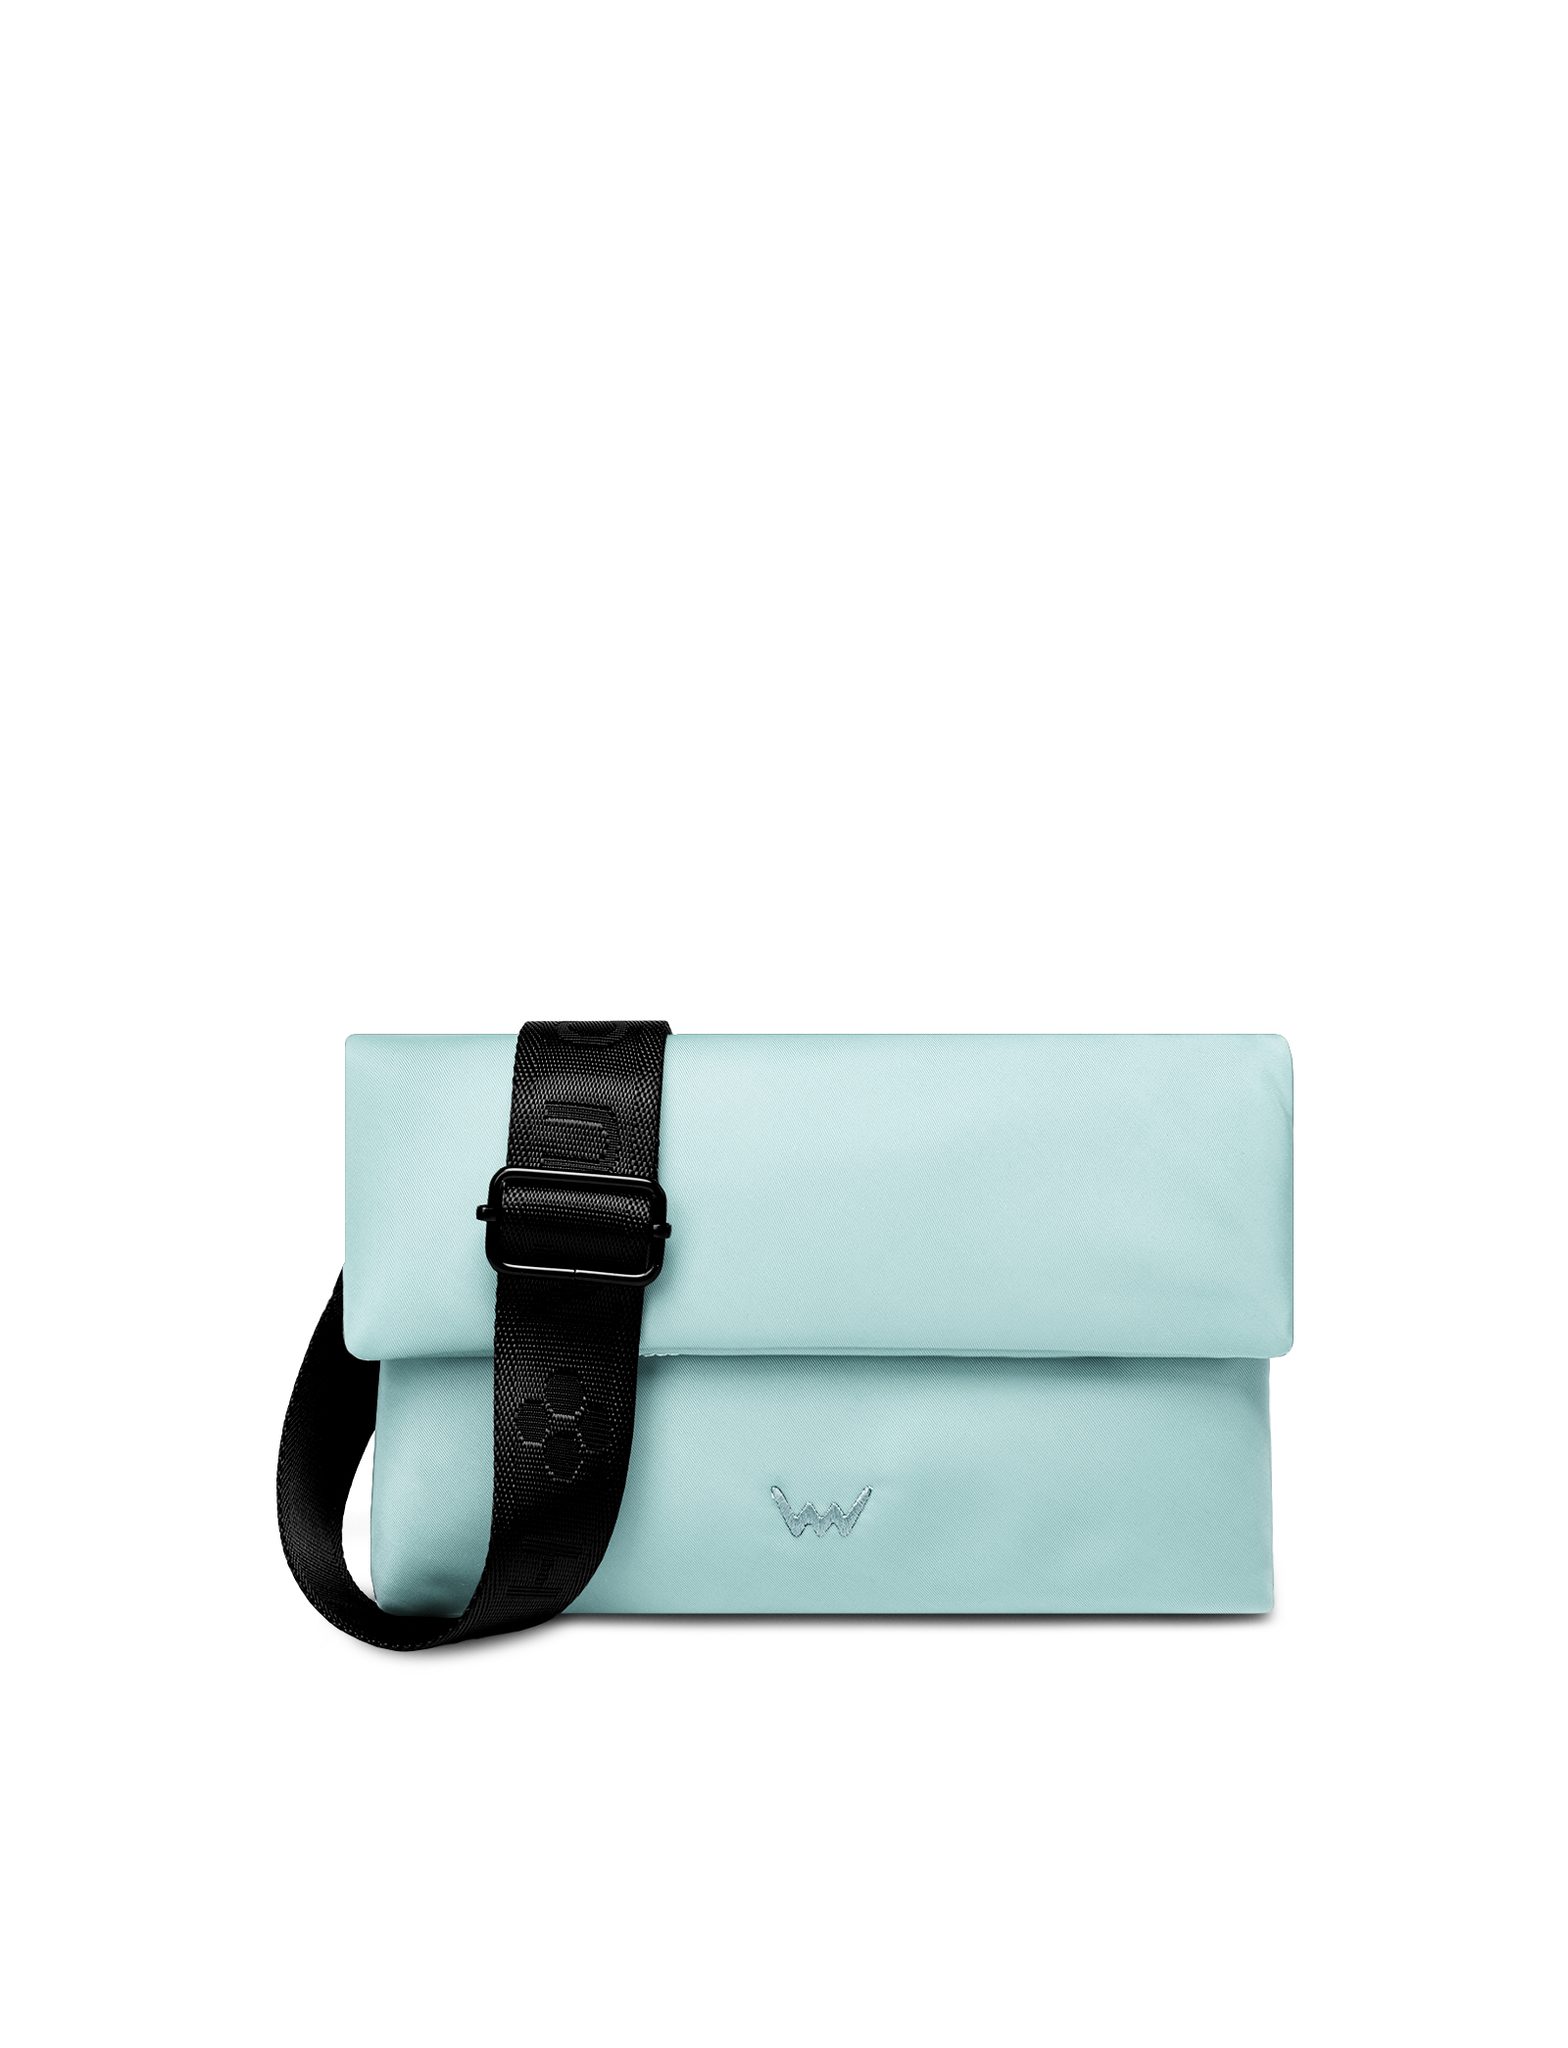 Handbag VUCH Yella Mint